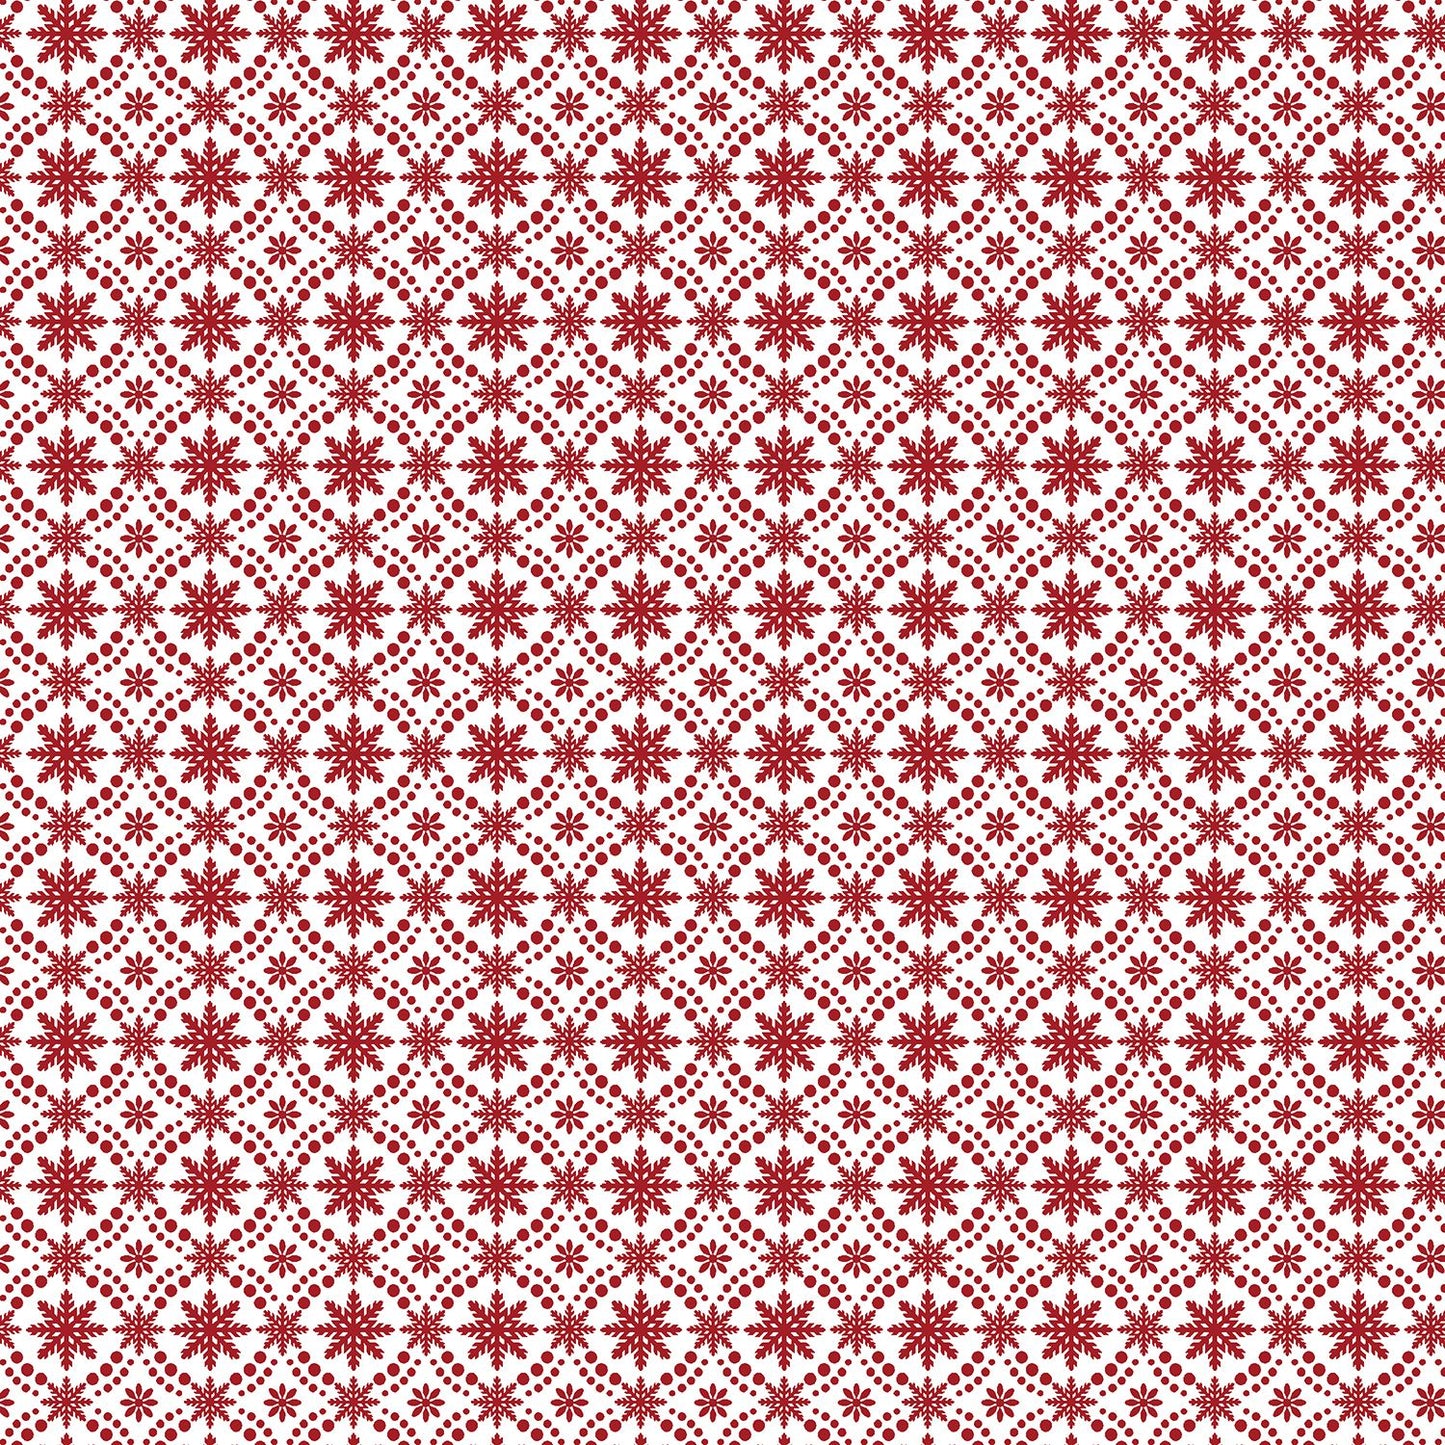 44 x 36 Snowflake Medallion Red Benartex 100% Cotton Fabric Christmas